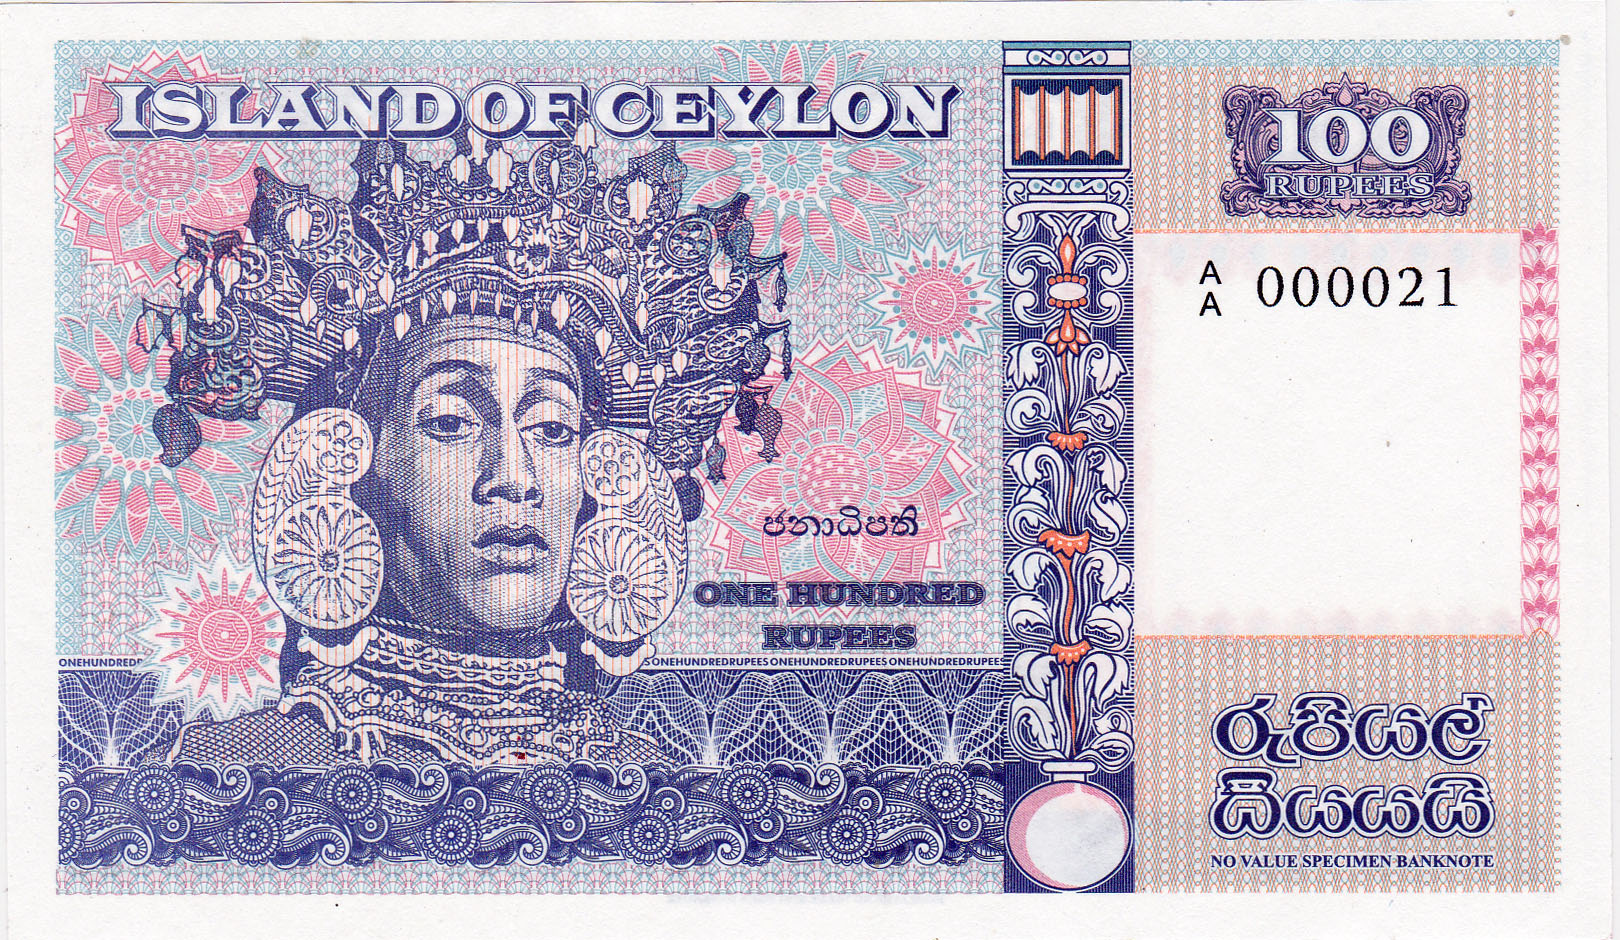 Tom Brandton blue 100 Rupees Ceylon Private Fantasy banknote 